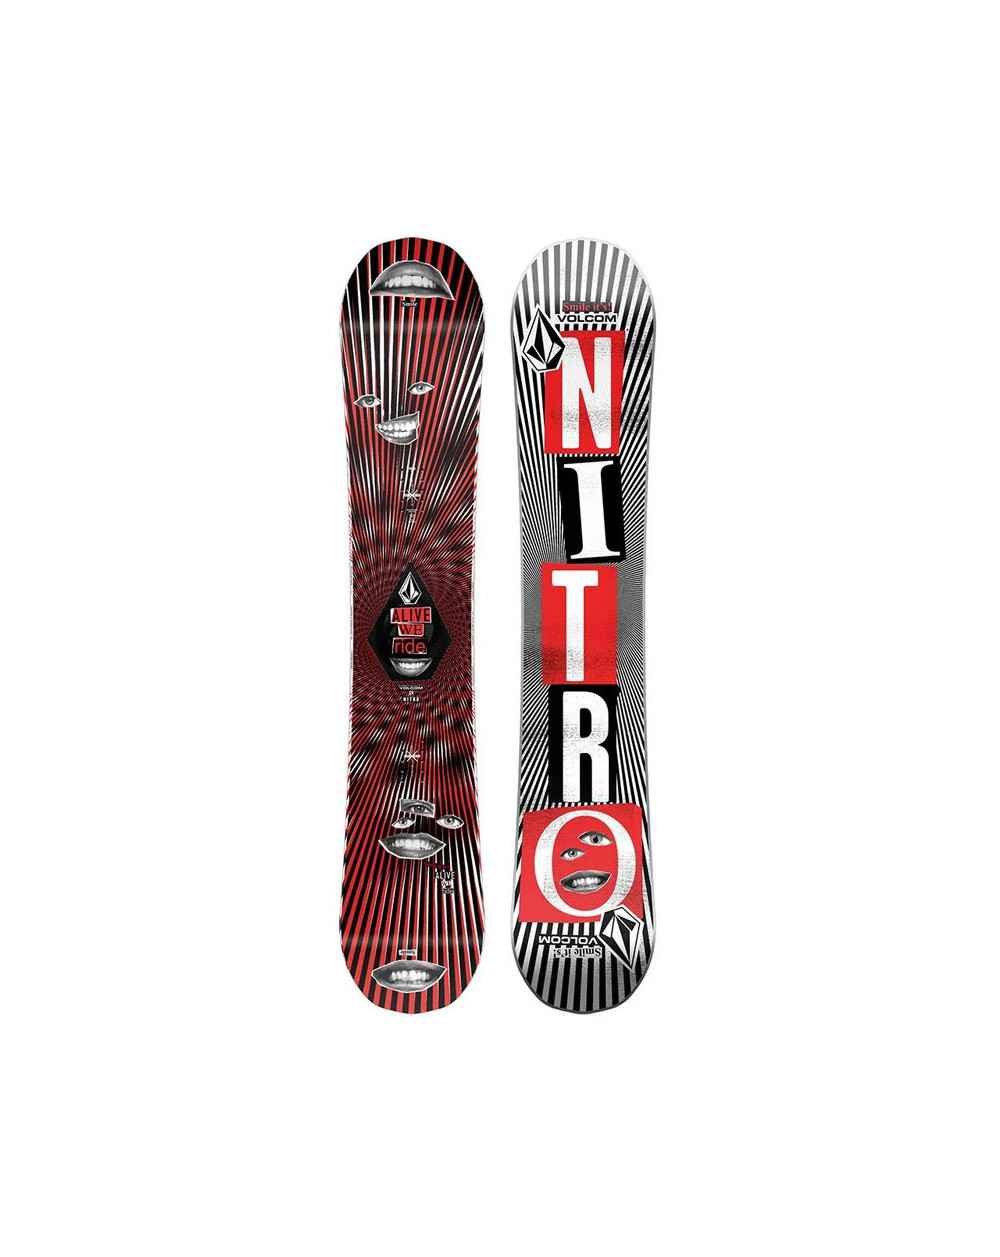 Nitro Beast X Volcom 2021 - Snowboard